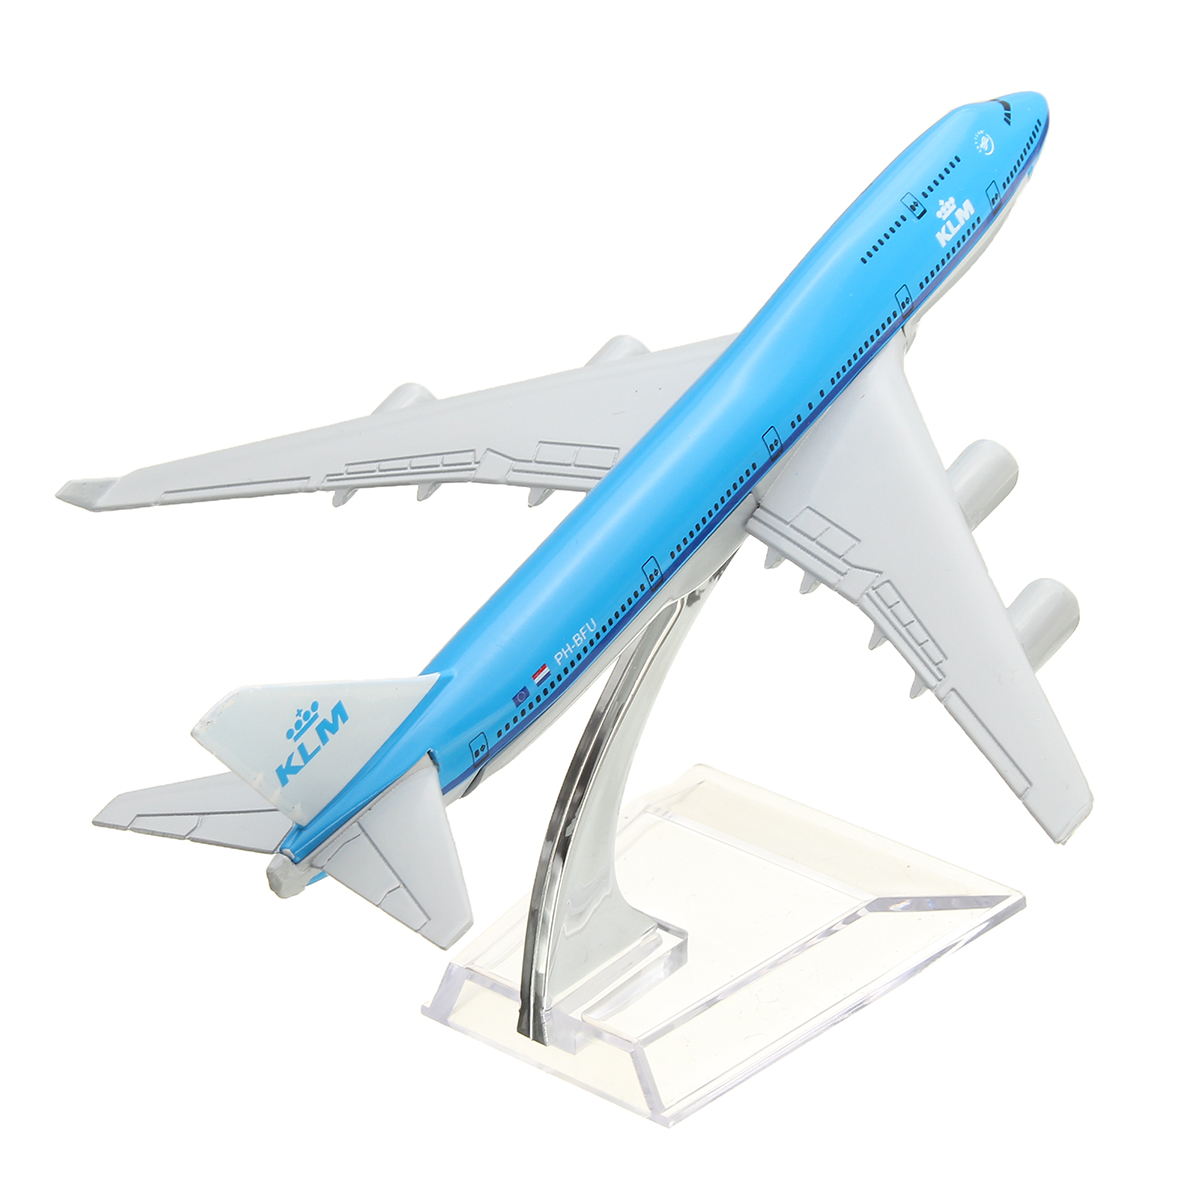 NEW-16cm-Airplane-Metal-Plane-Model-Aircraft-B747-KLM-Aeroplane-Scale-Airplane-Desk-Toy-1102722-2